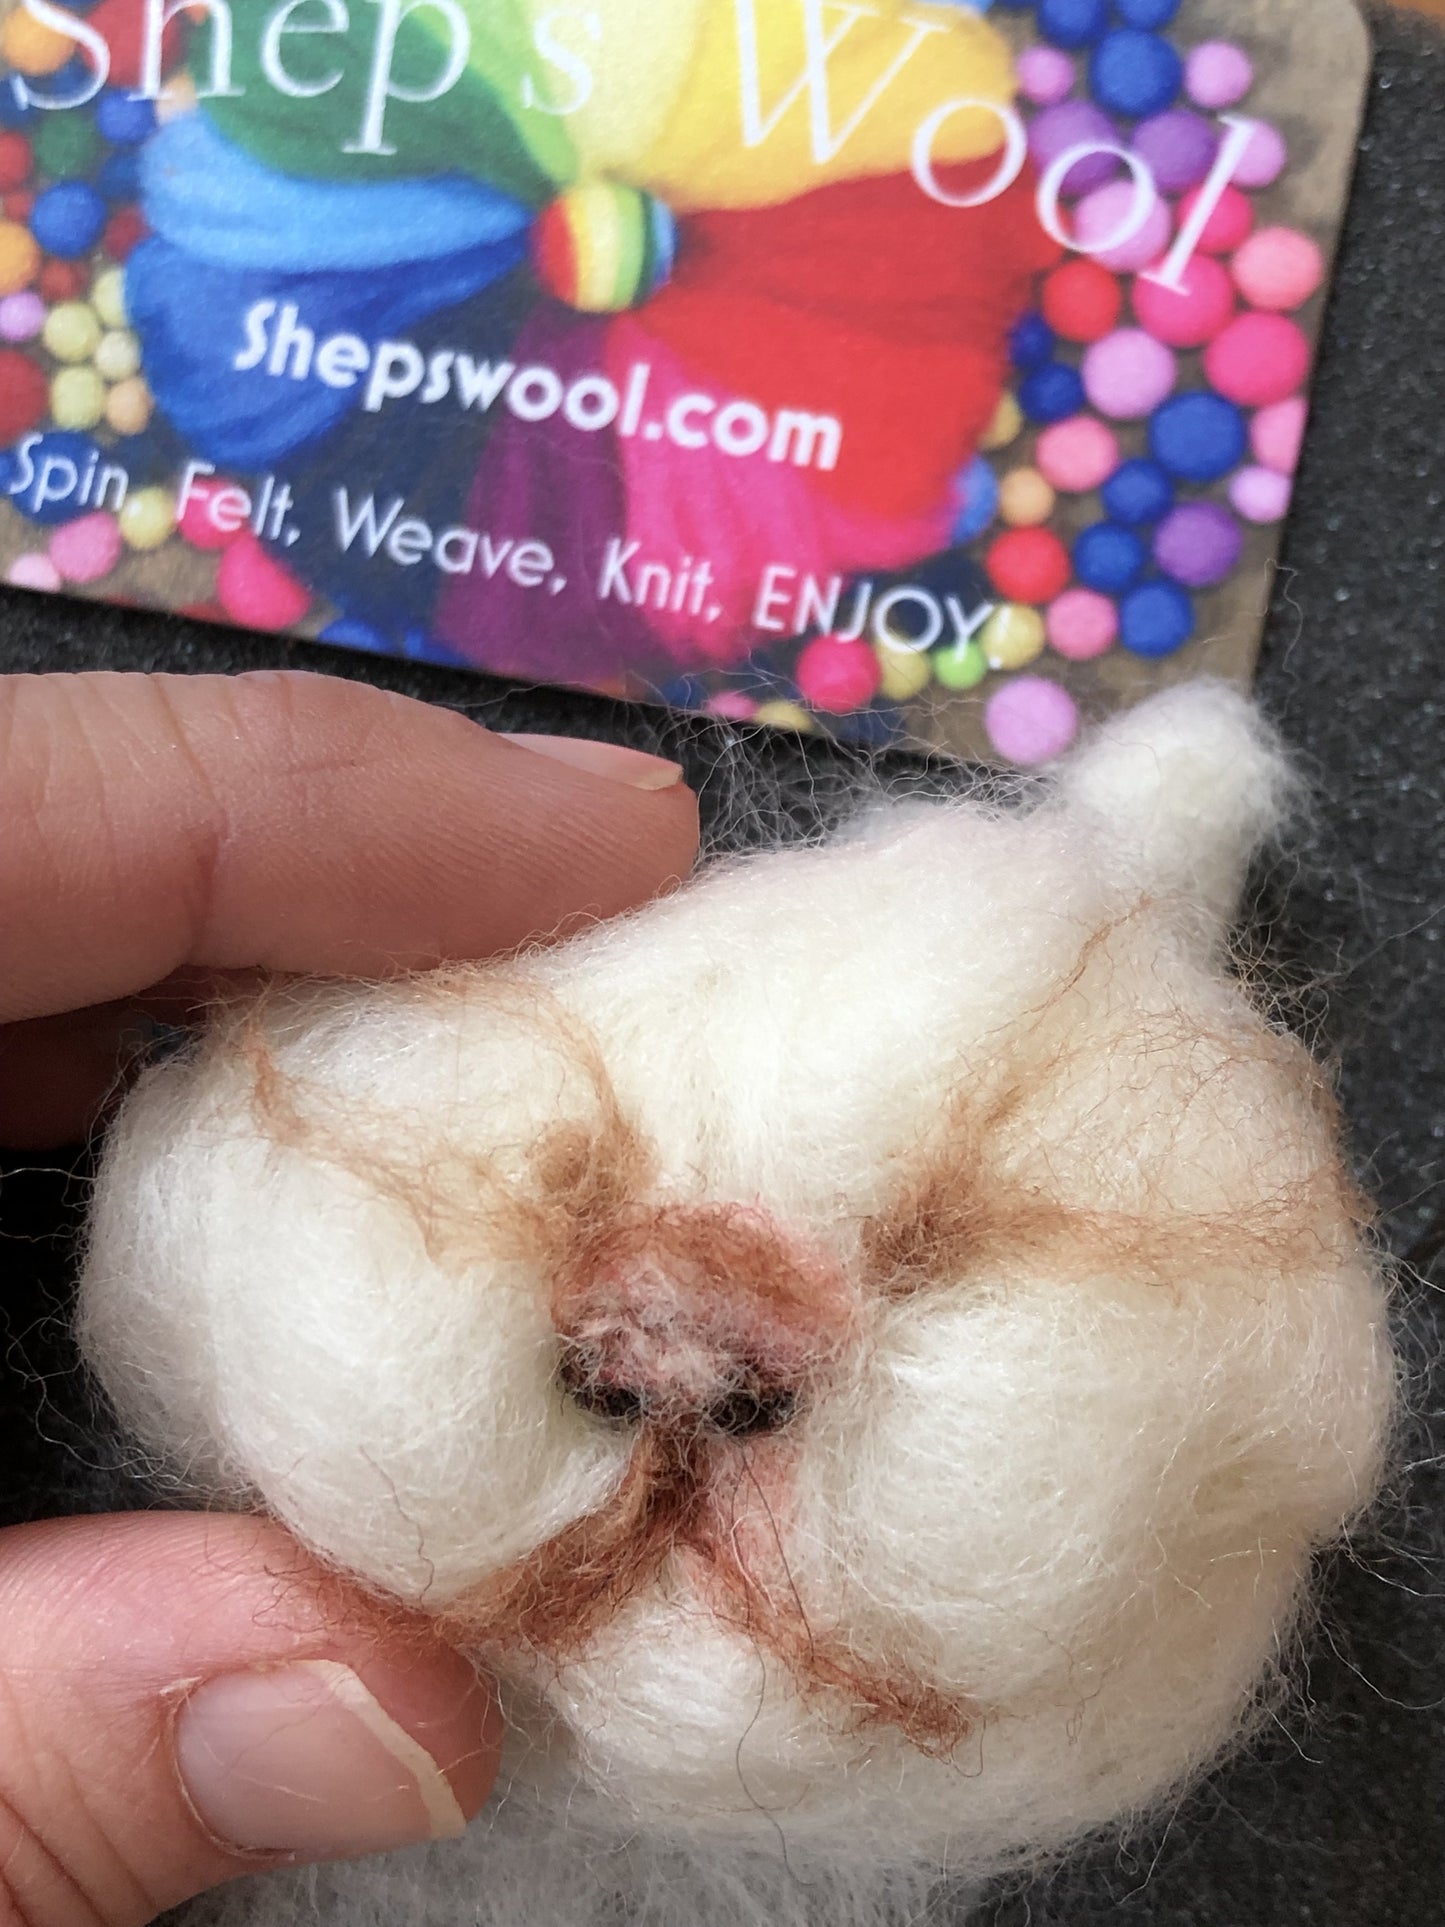 White Wool Roving, Roving, Spin Fiber, Wool For Spinning, Wool For Felting, Weaving, Arm Knitting